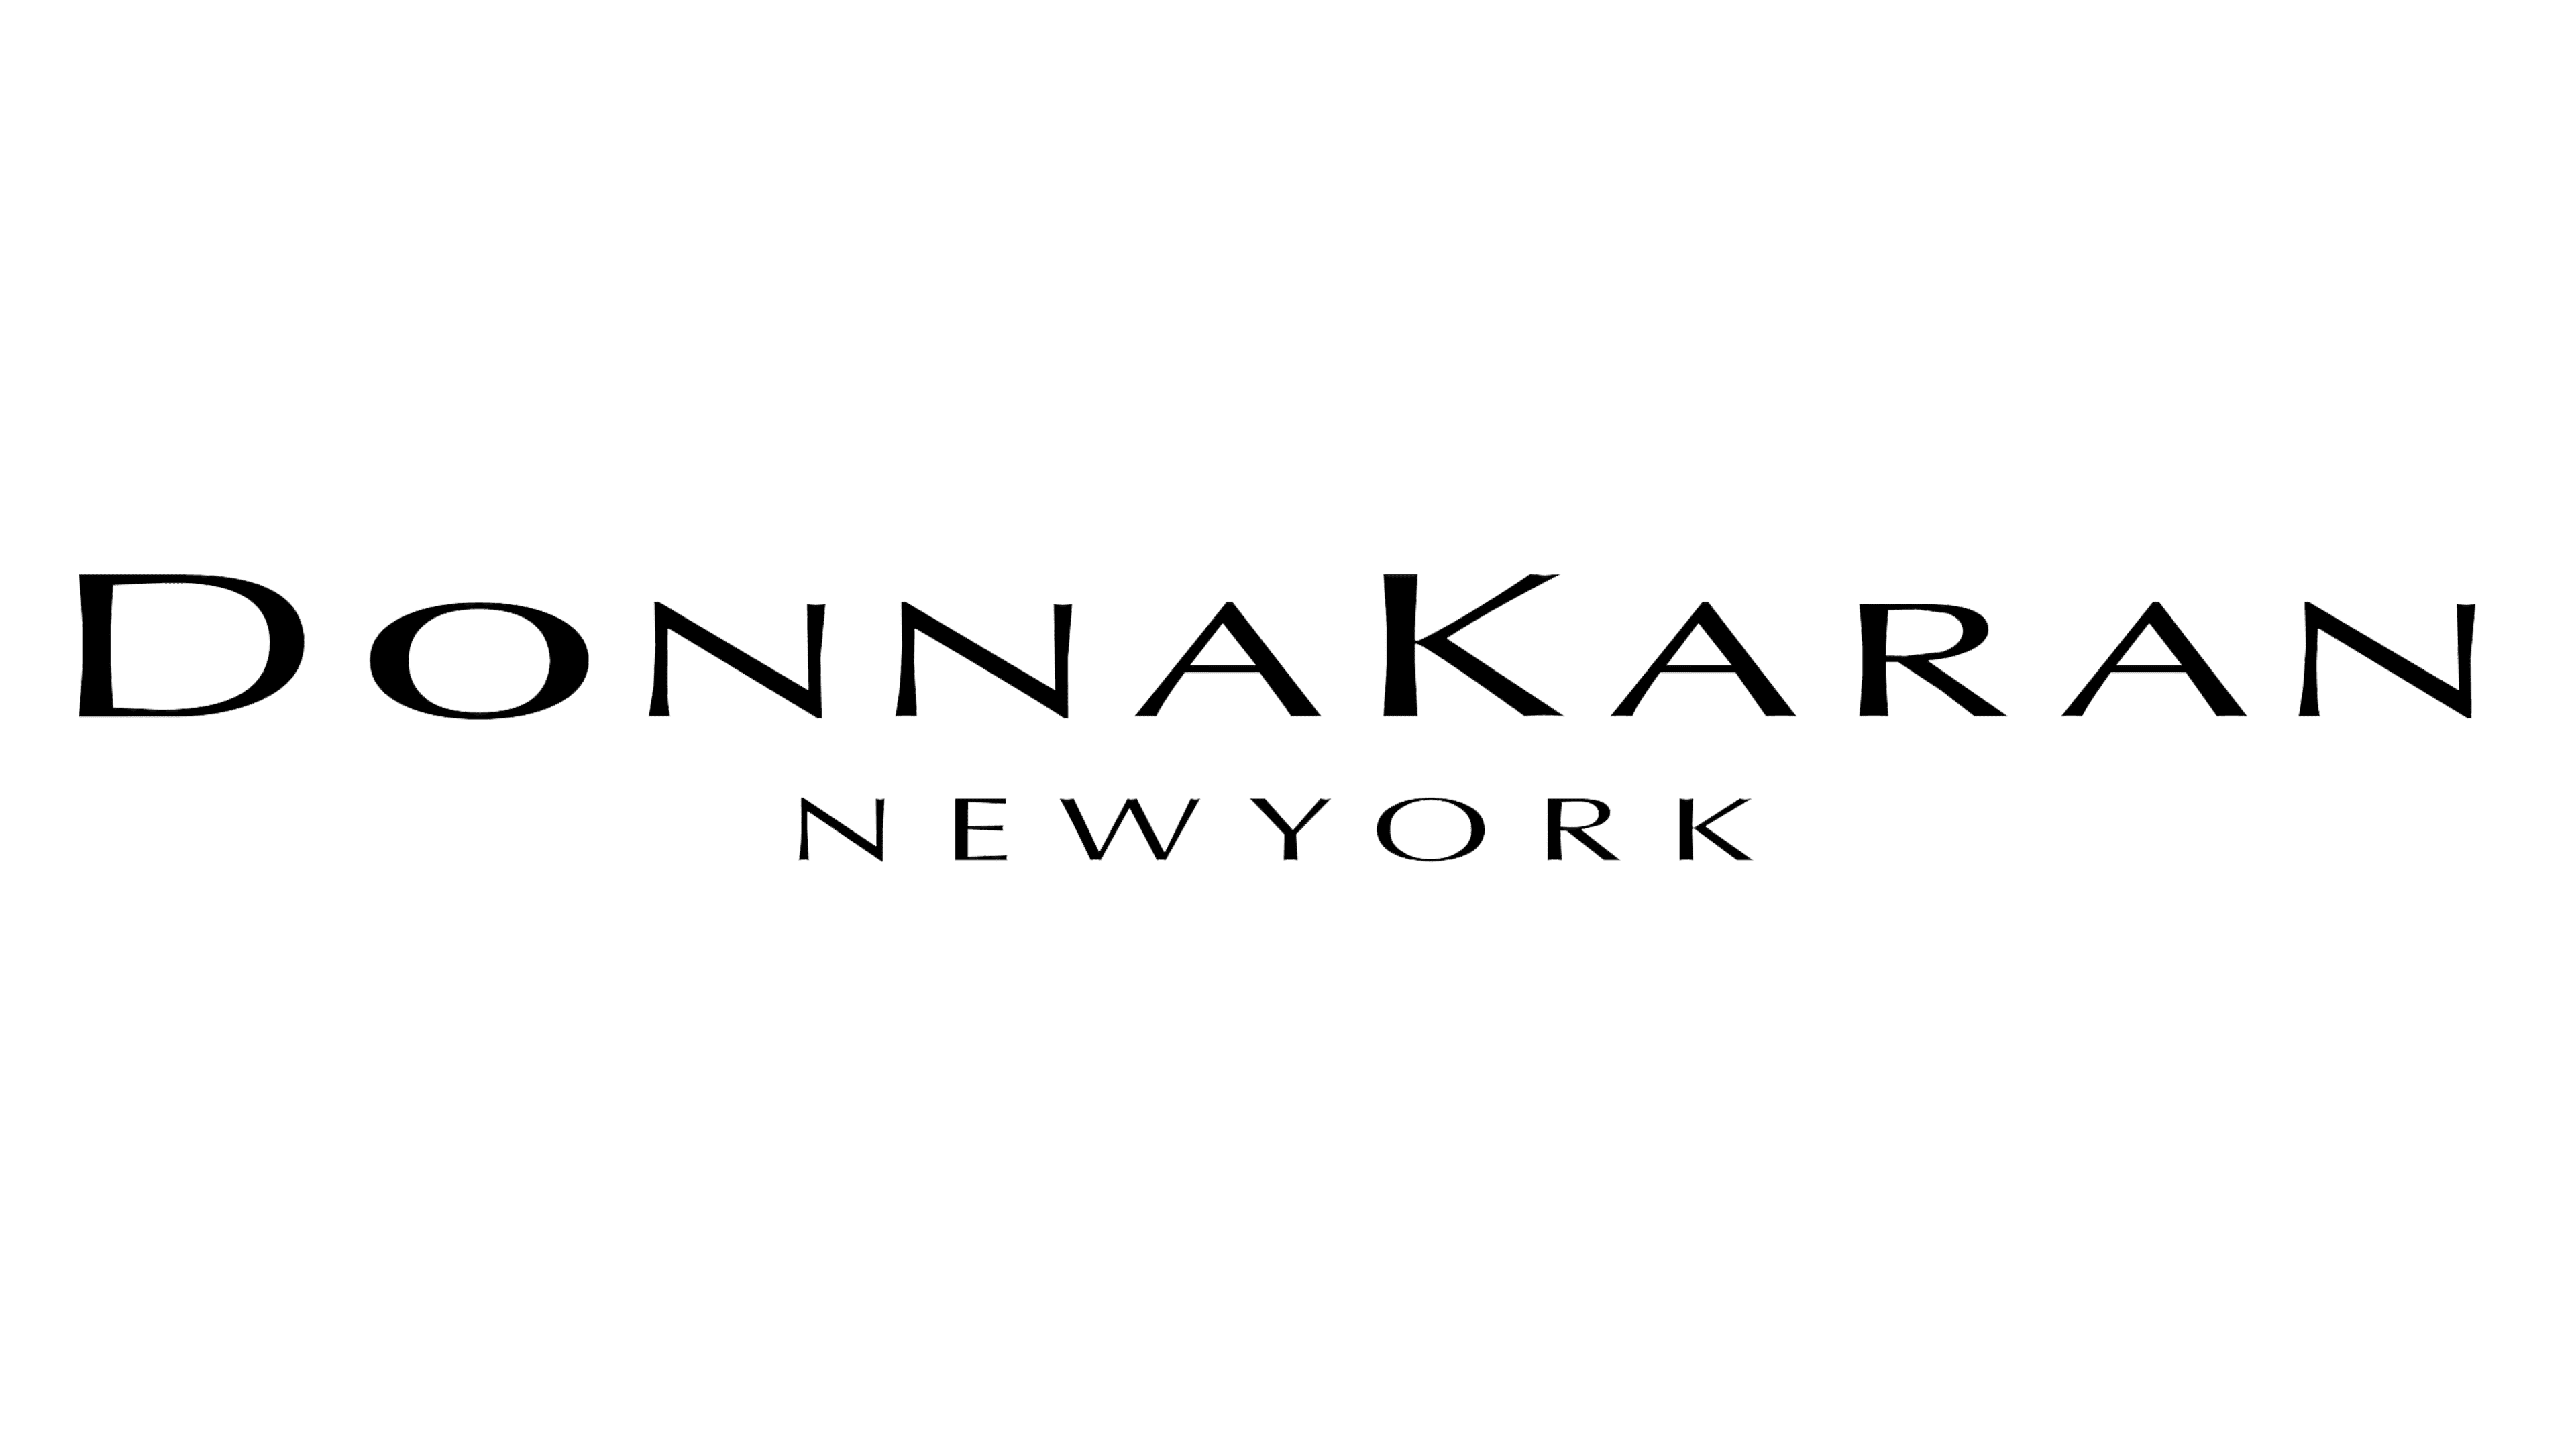 Donna Karan - Simple English Wikipedia, the free encyclopedia